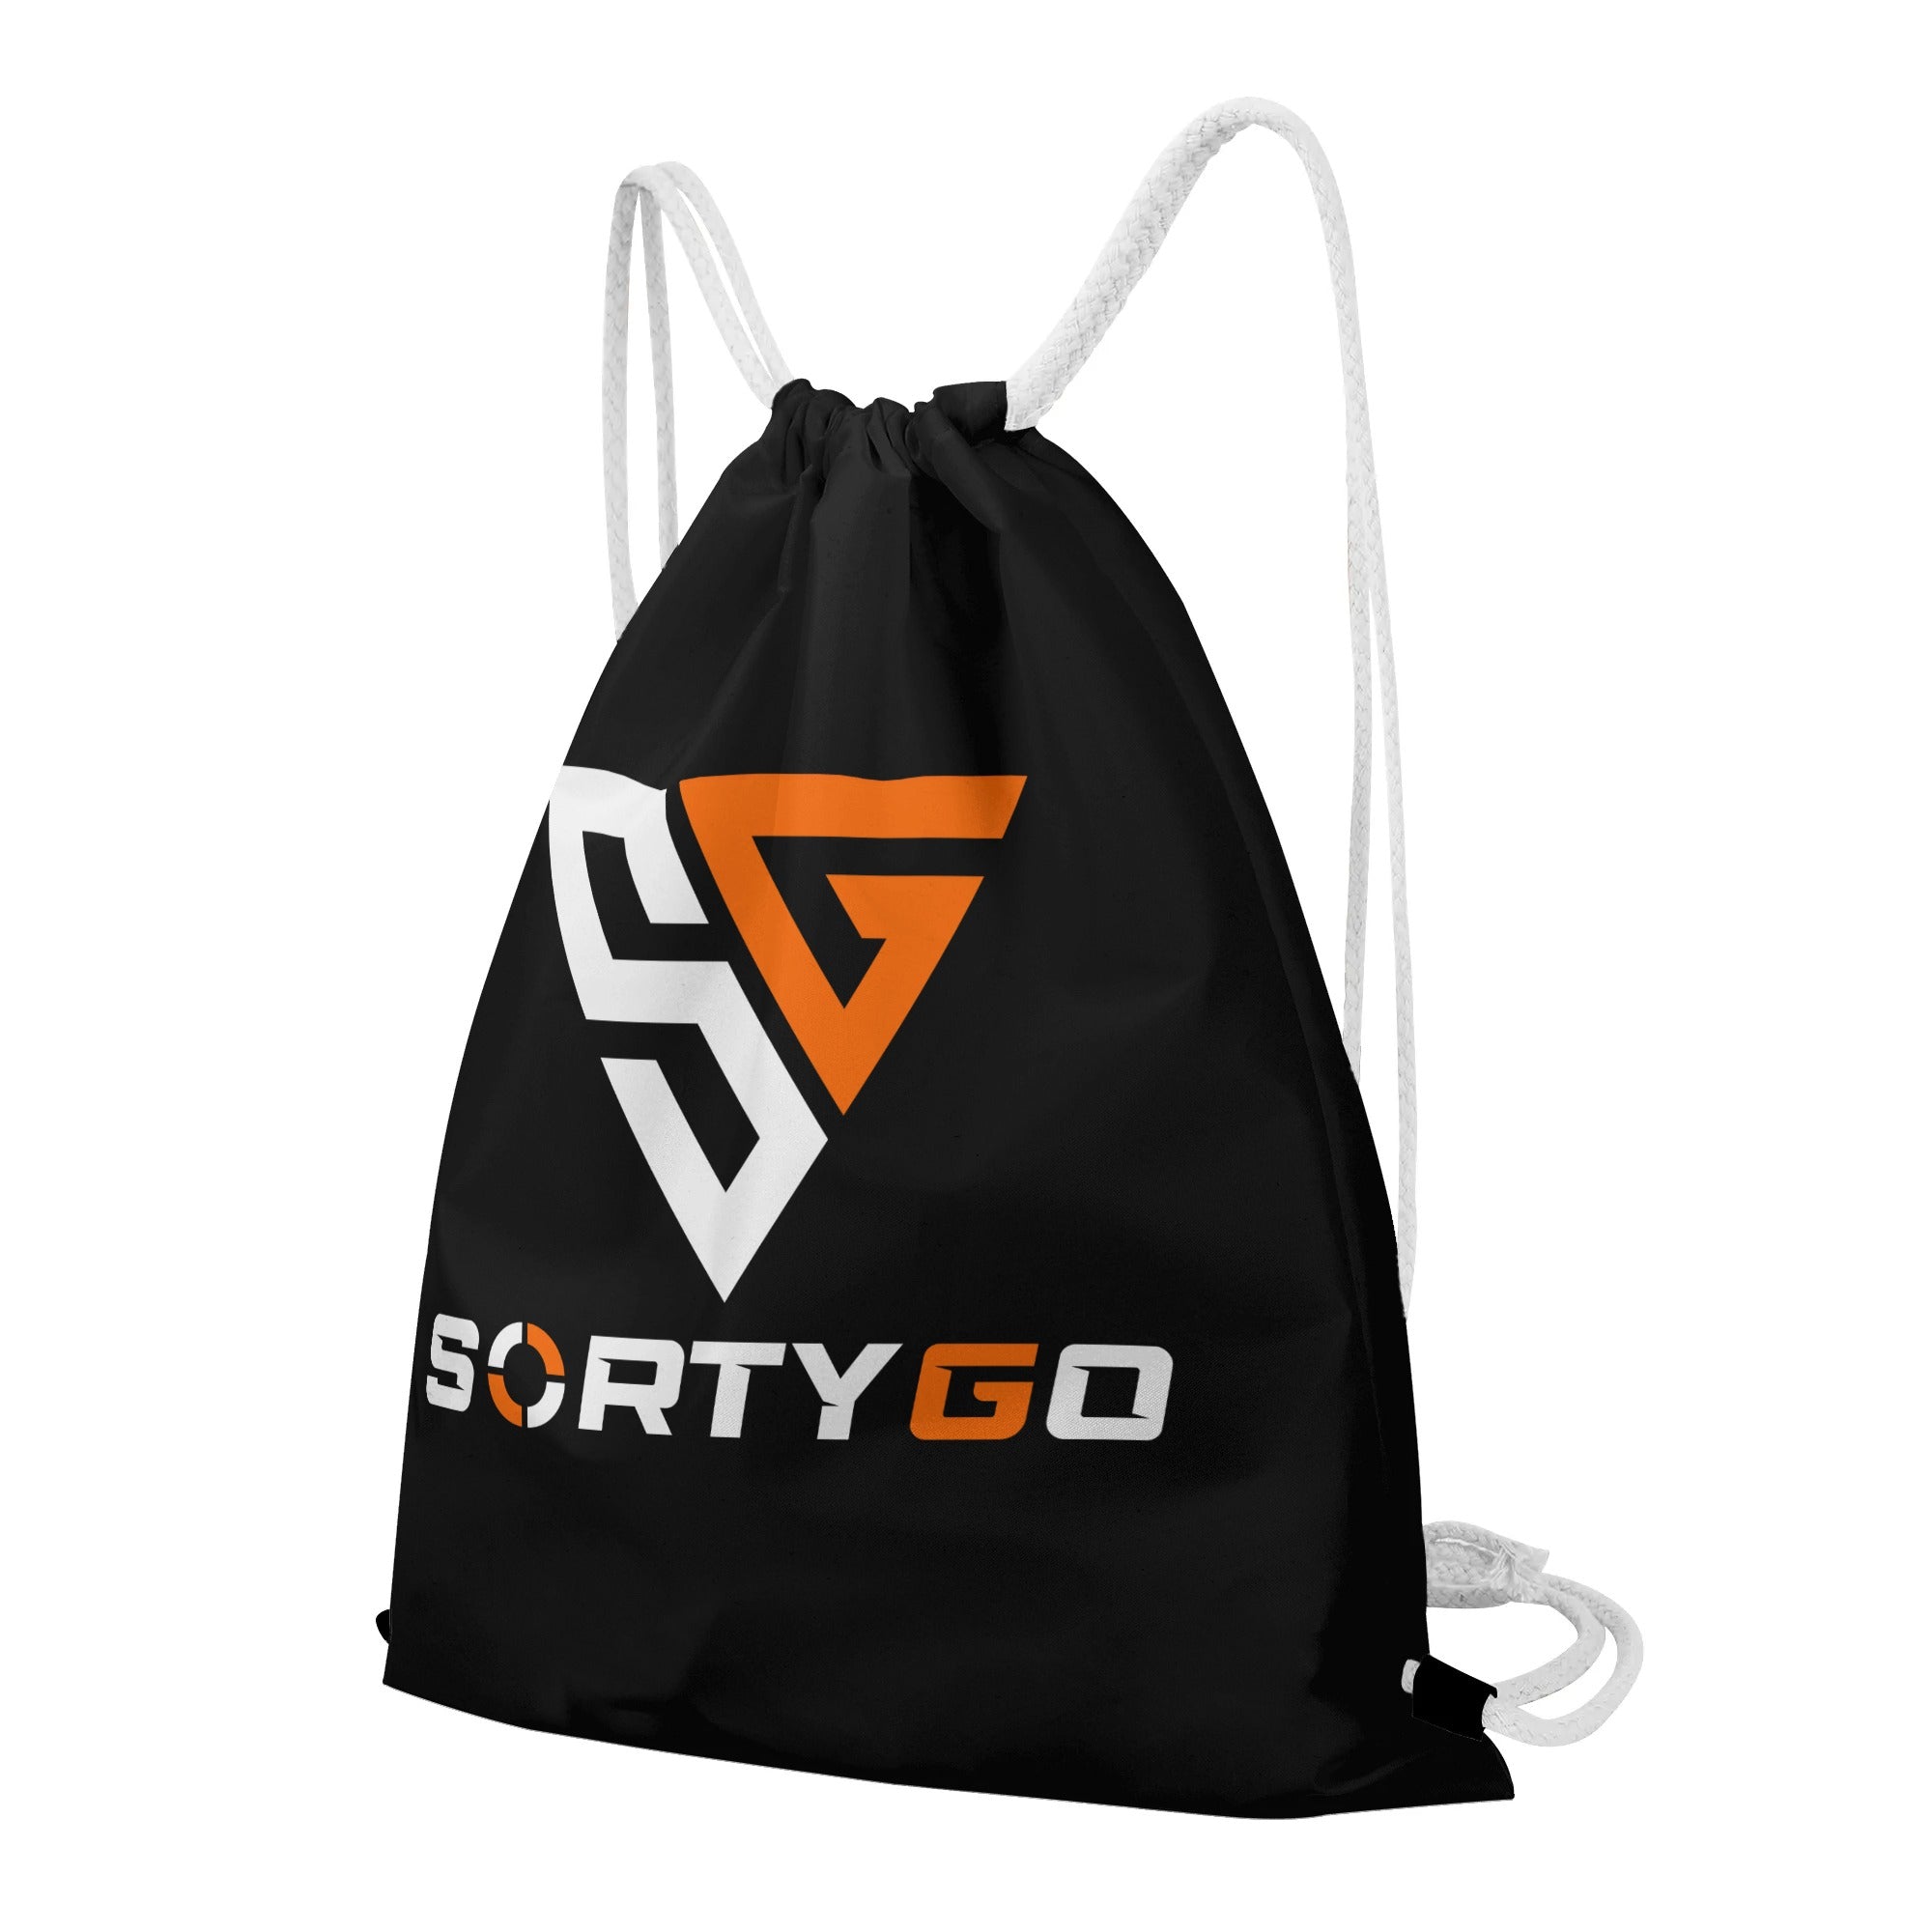 SORTYGO - Lacework Drawstring Bag in